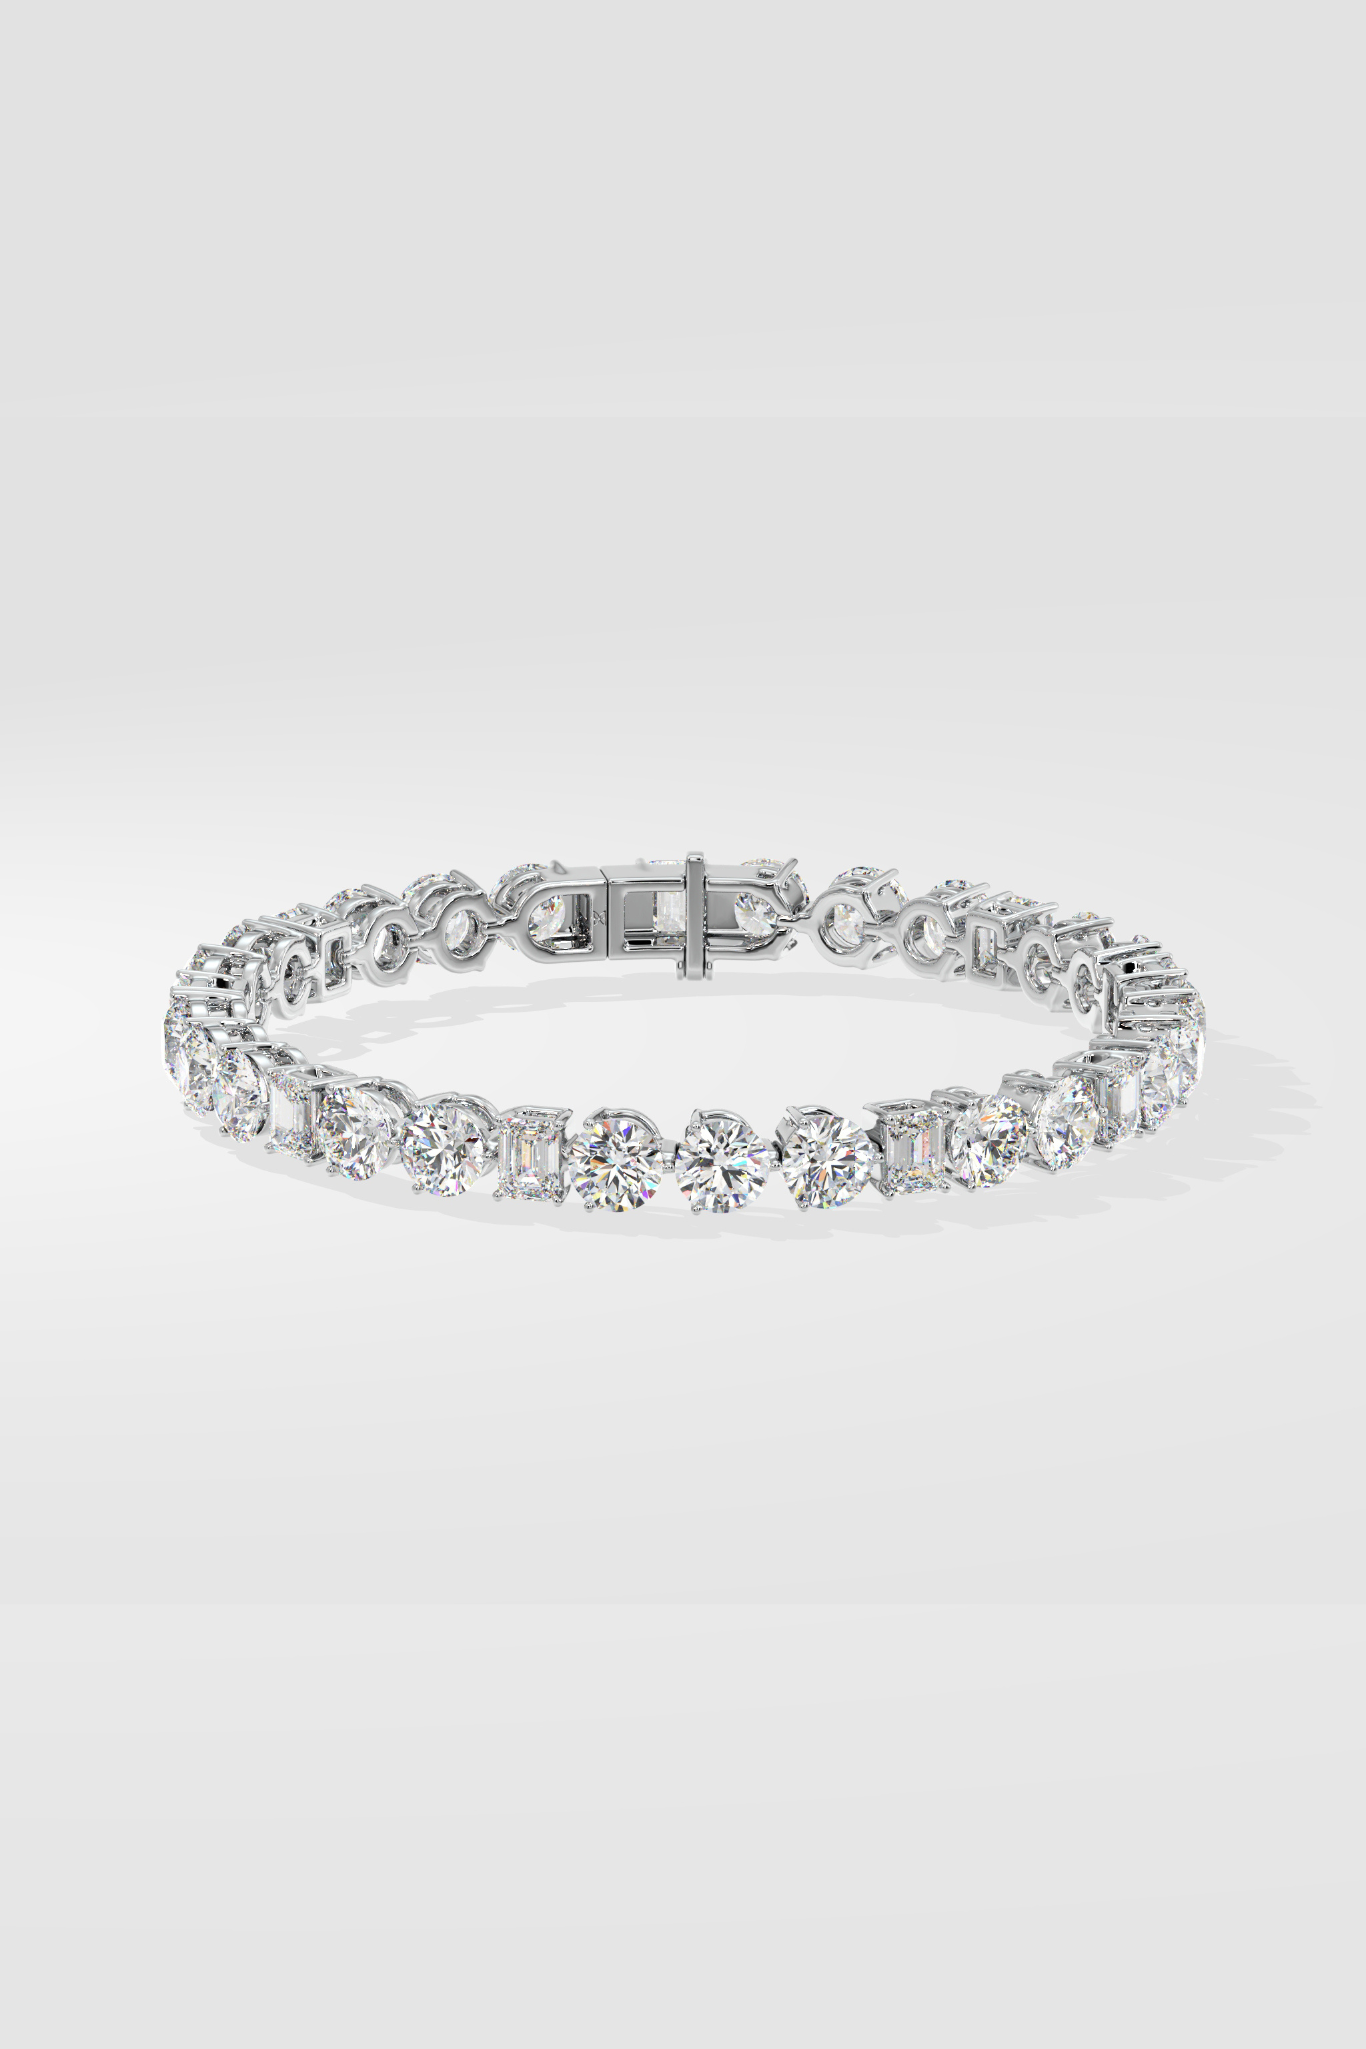 Diamond Bracelet White Gold| Natural Diamond|Diamond Bracelet - 100% Real  18k White Gold Bracelet- Aliexpress